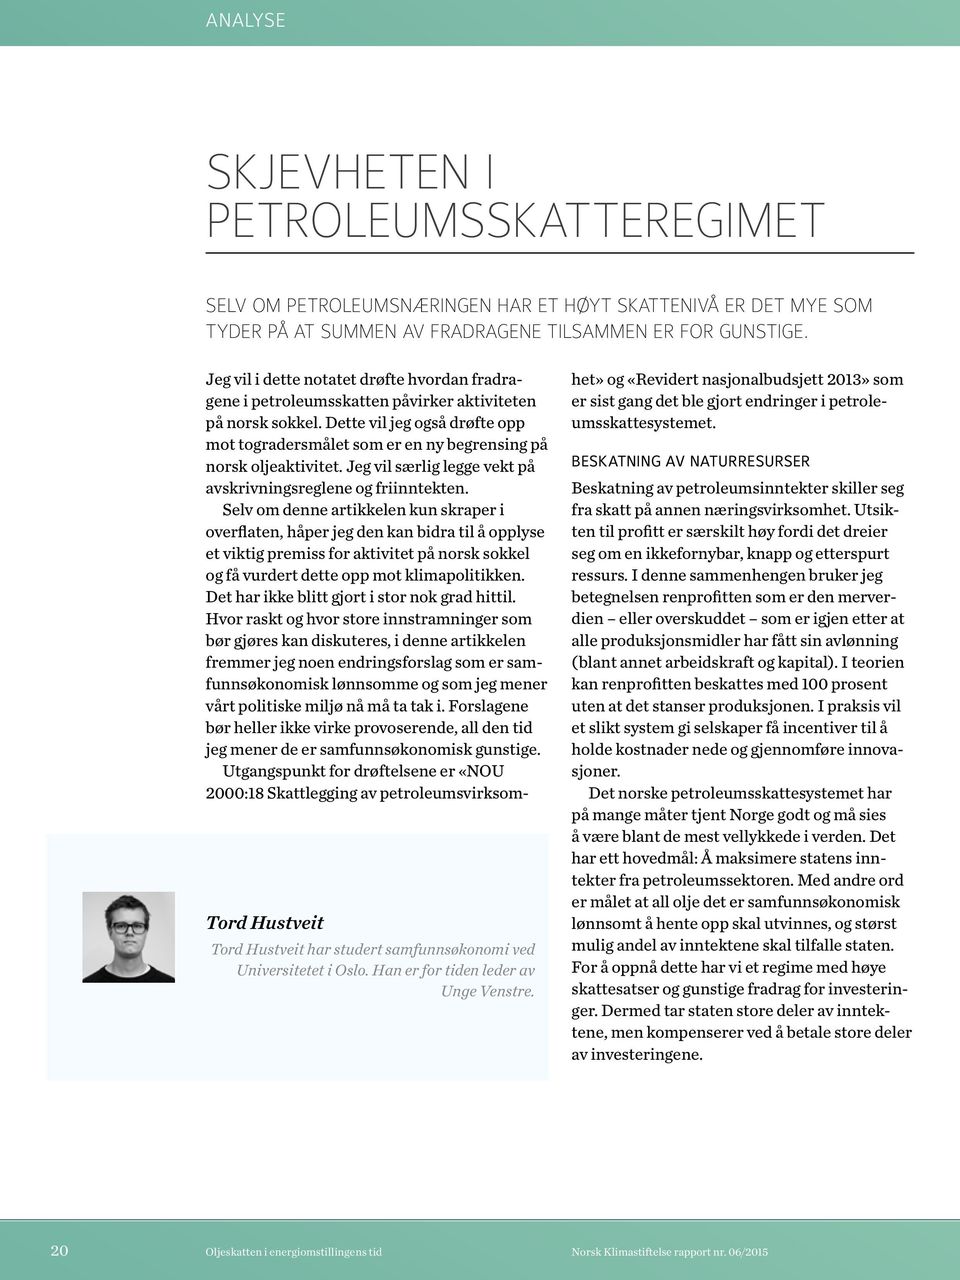 Jeg vil i dette notatet drøfte hvordan fradragene i petroleumsskatten påvirker aktiviteten på norsk sokkel.